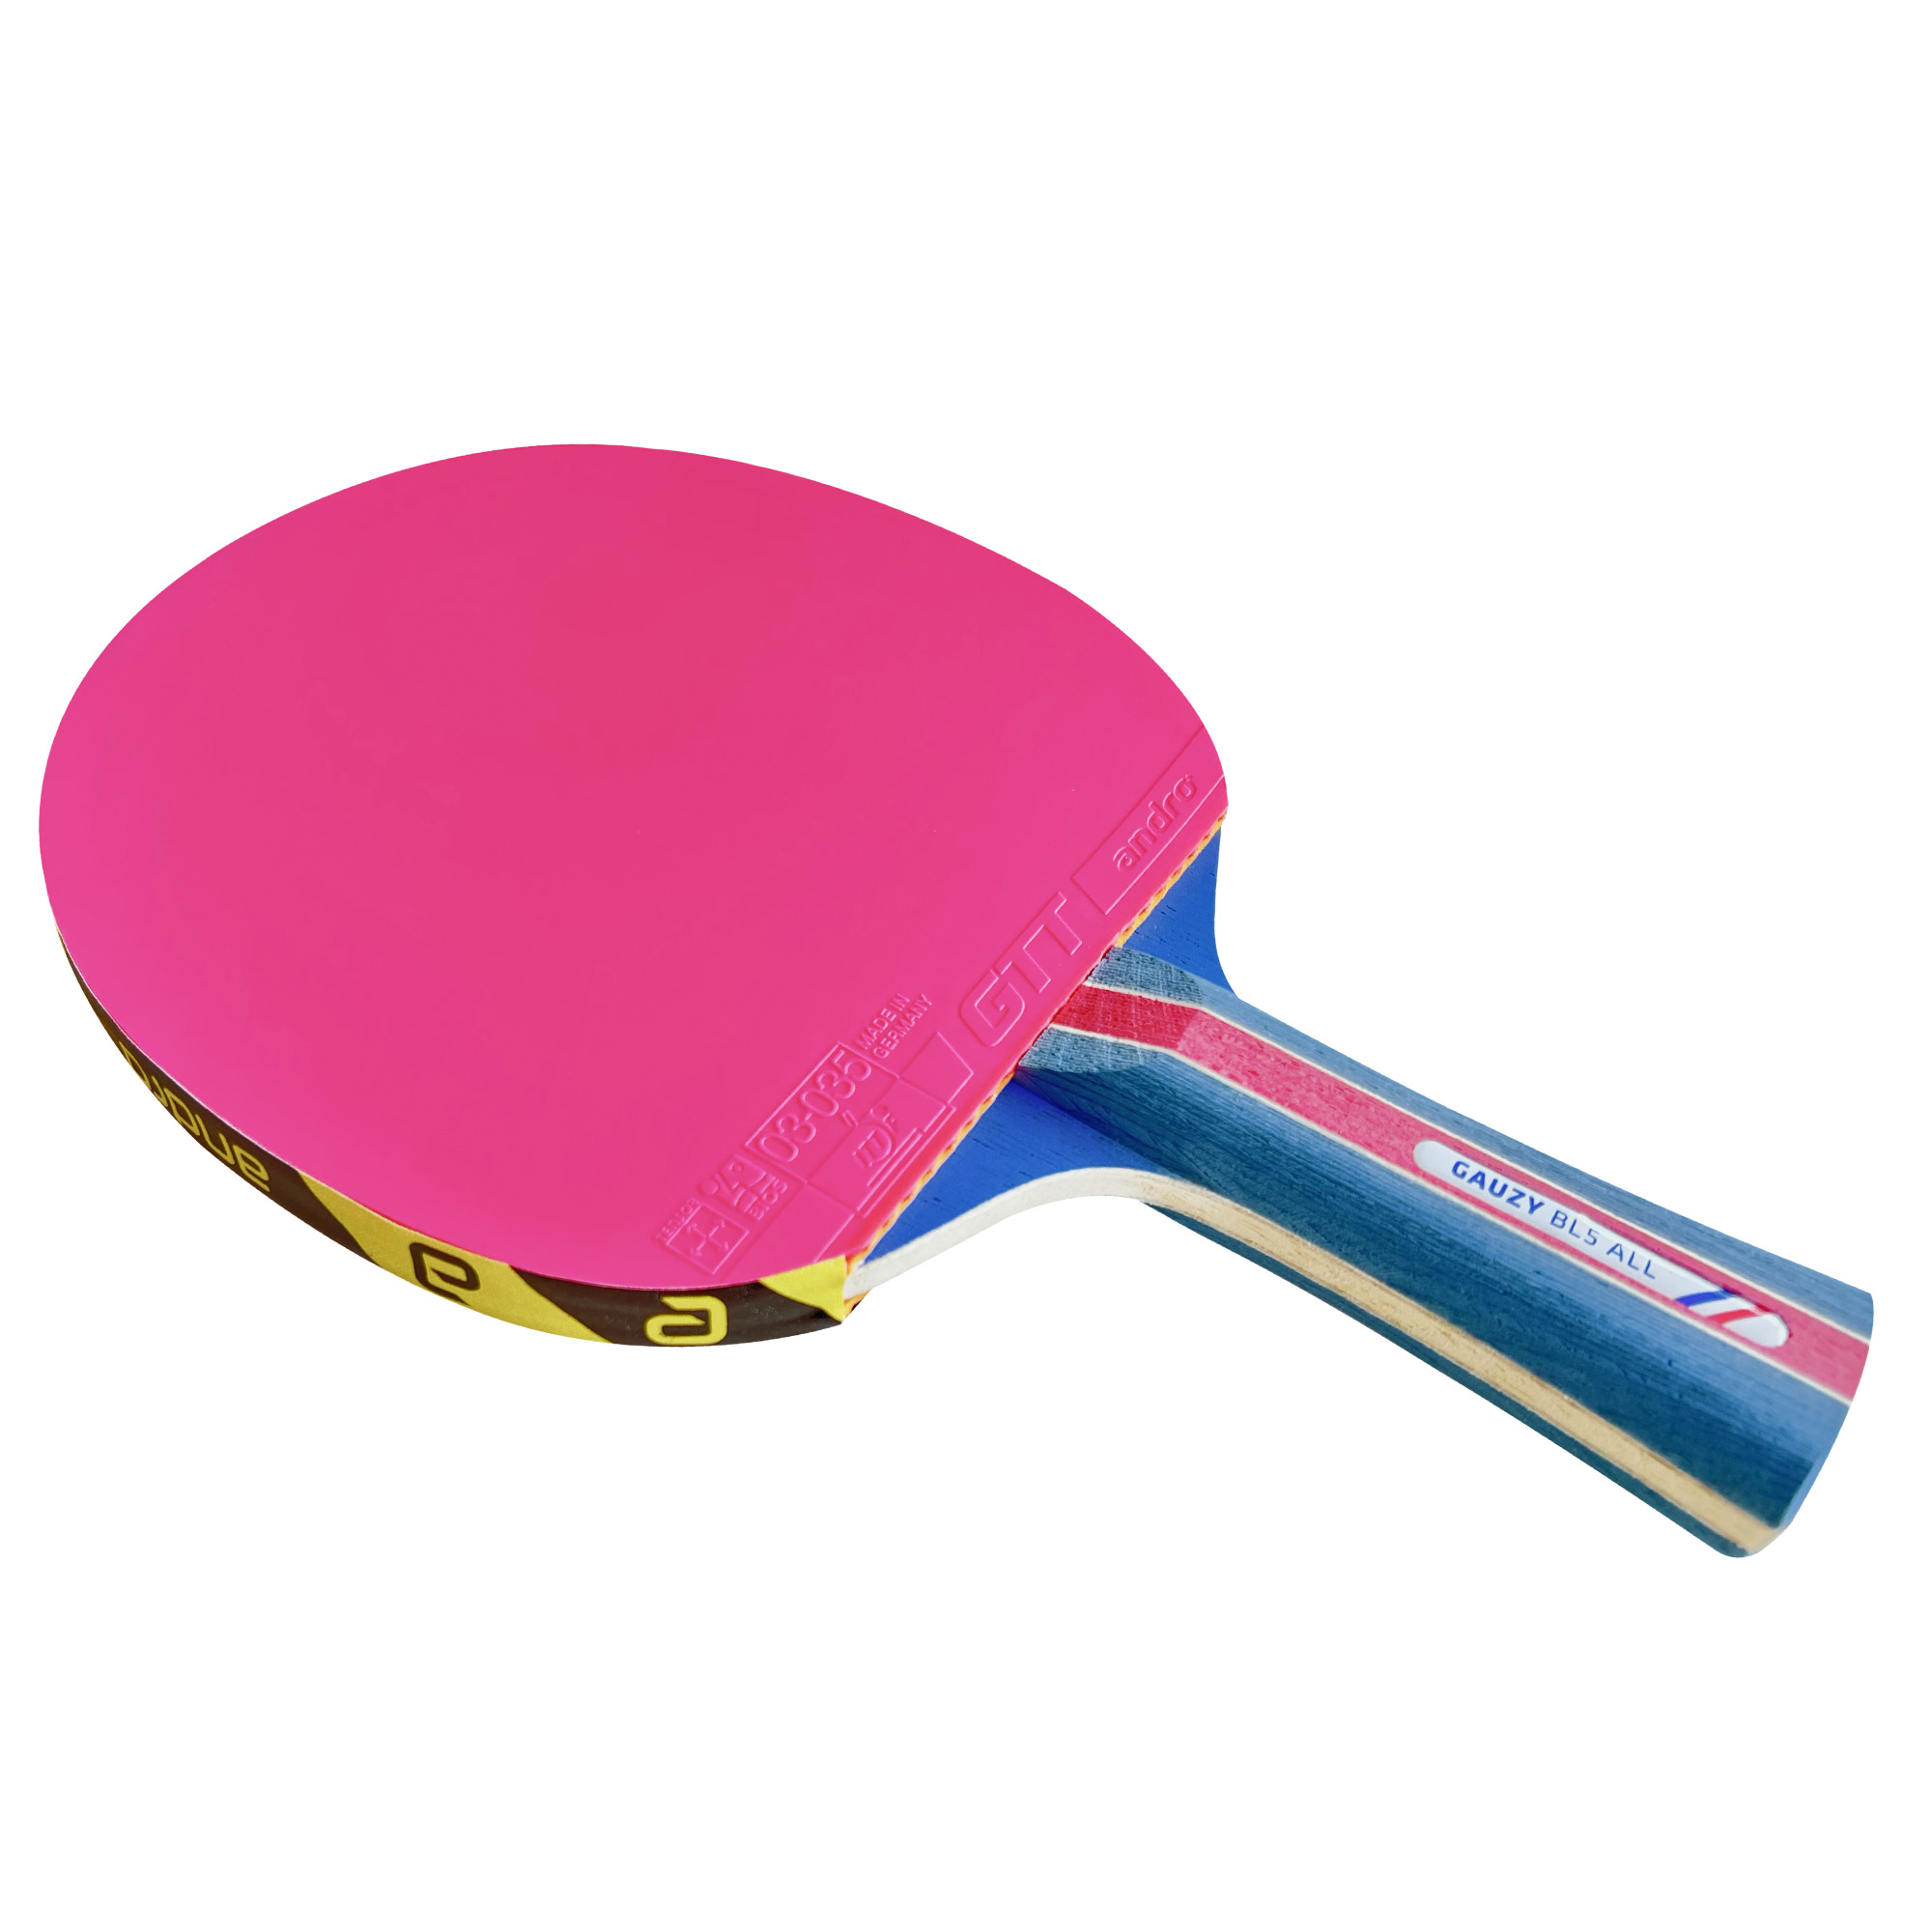 andro Komplettschläger G 300 P, Tischtennis Belag Pink, Farbig, Bunt TT-Xpert Tischtennis Onlineshop